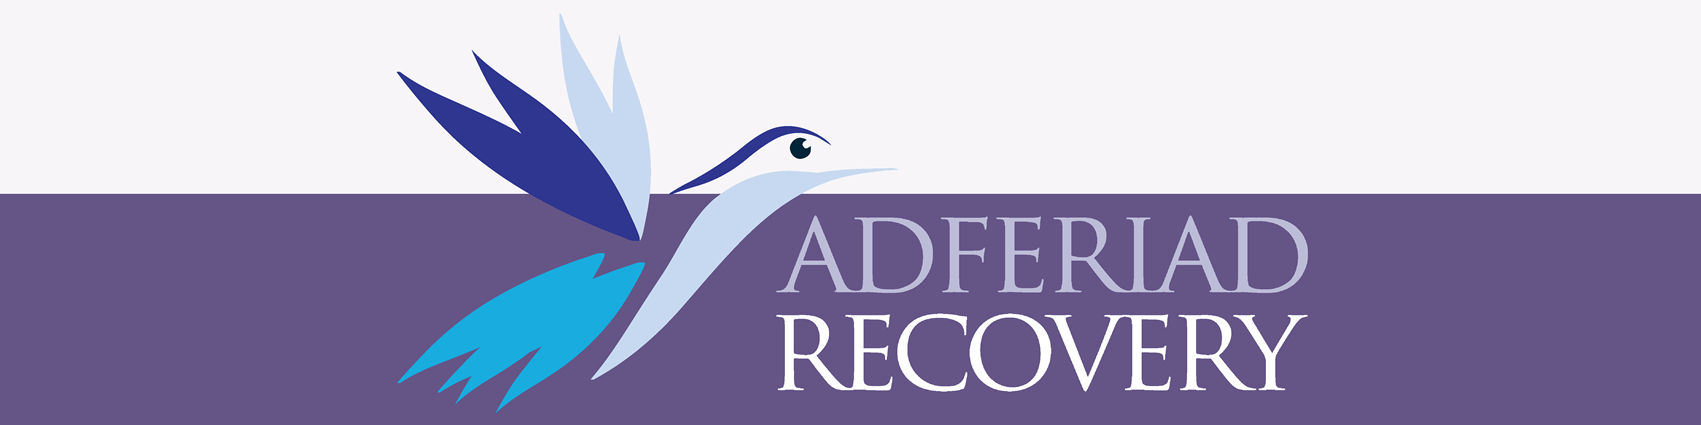 Adferiad Recovery Logo